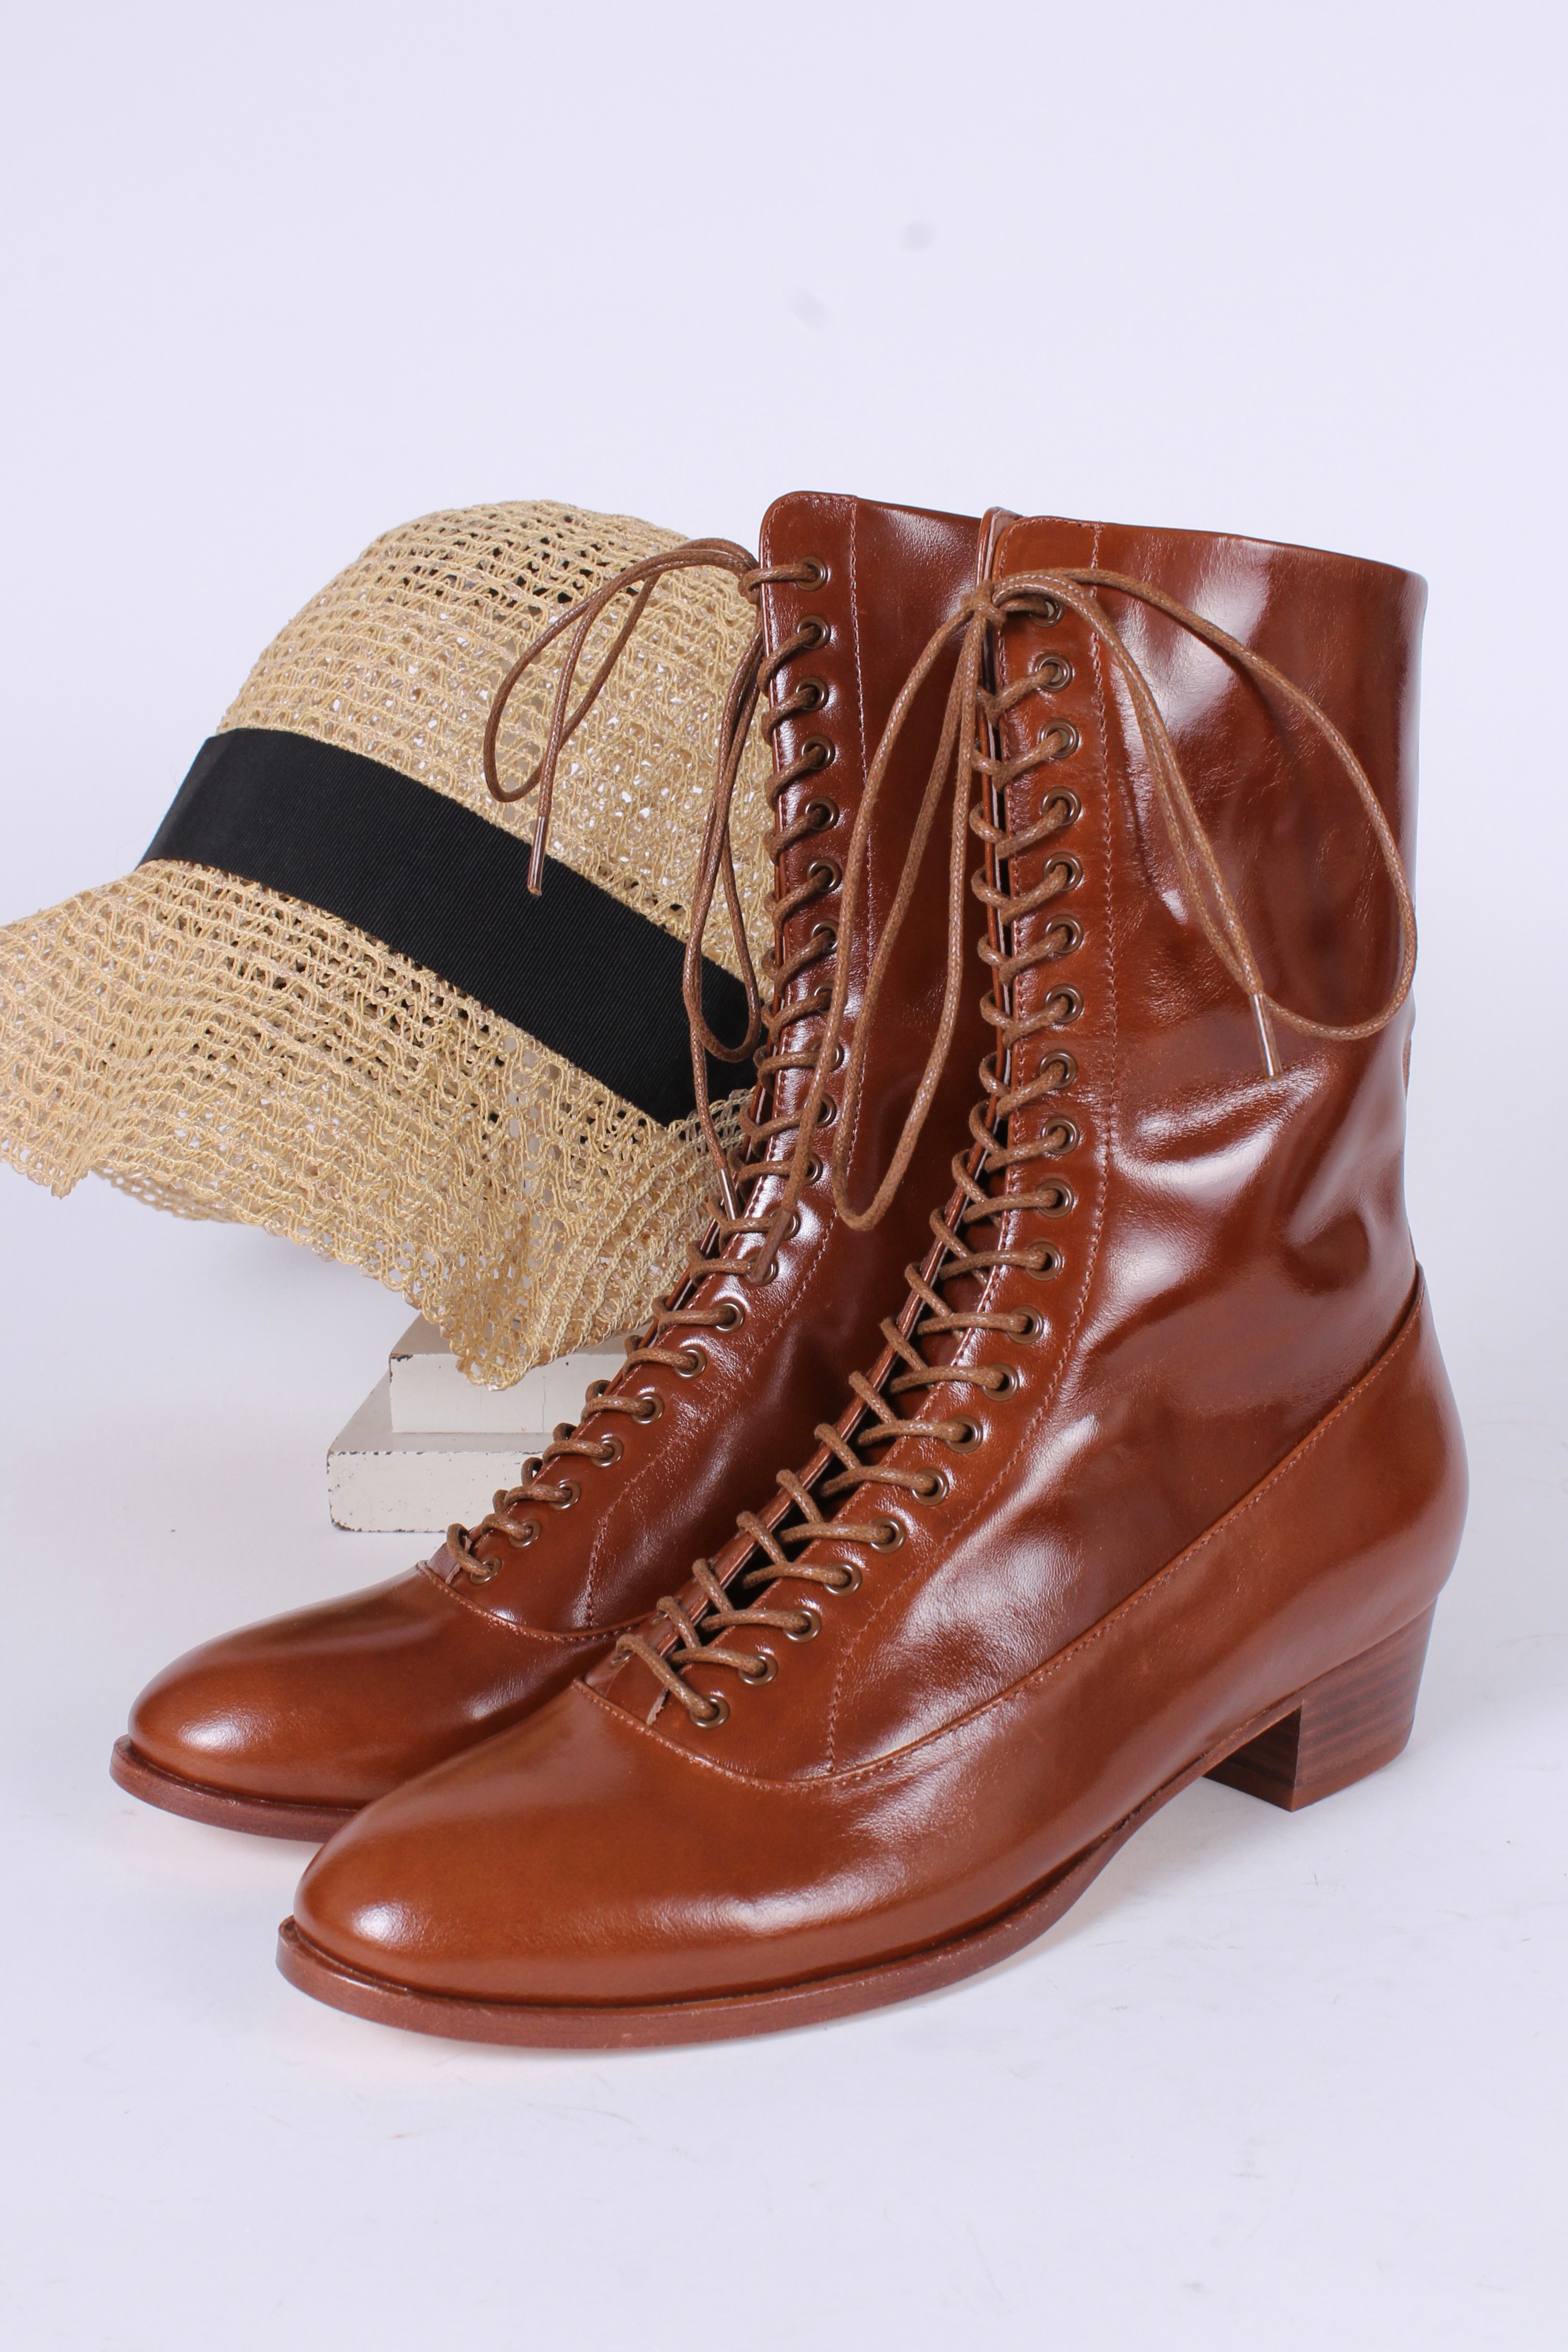 Støvler 1915-1920 - Cognac brun - Ruth